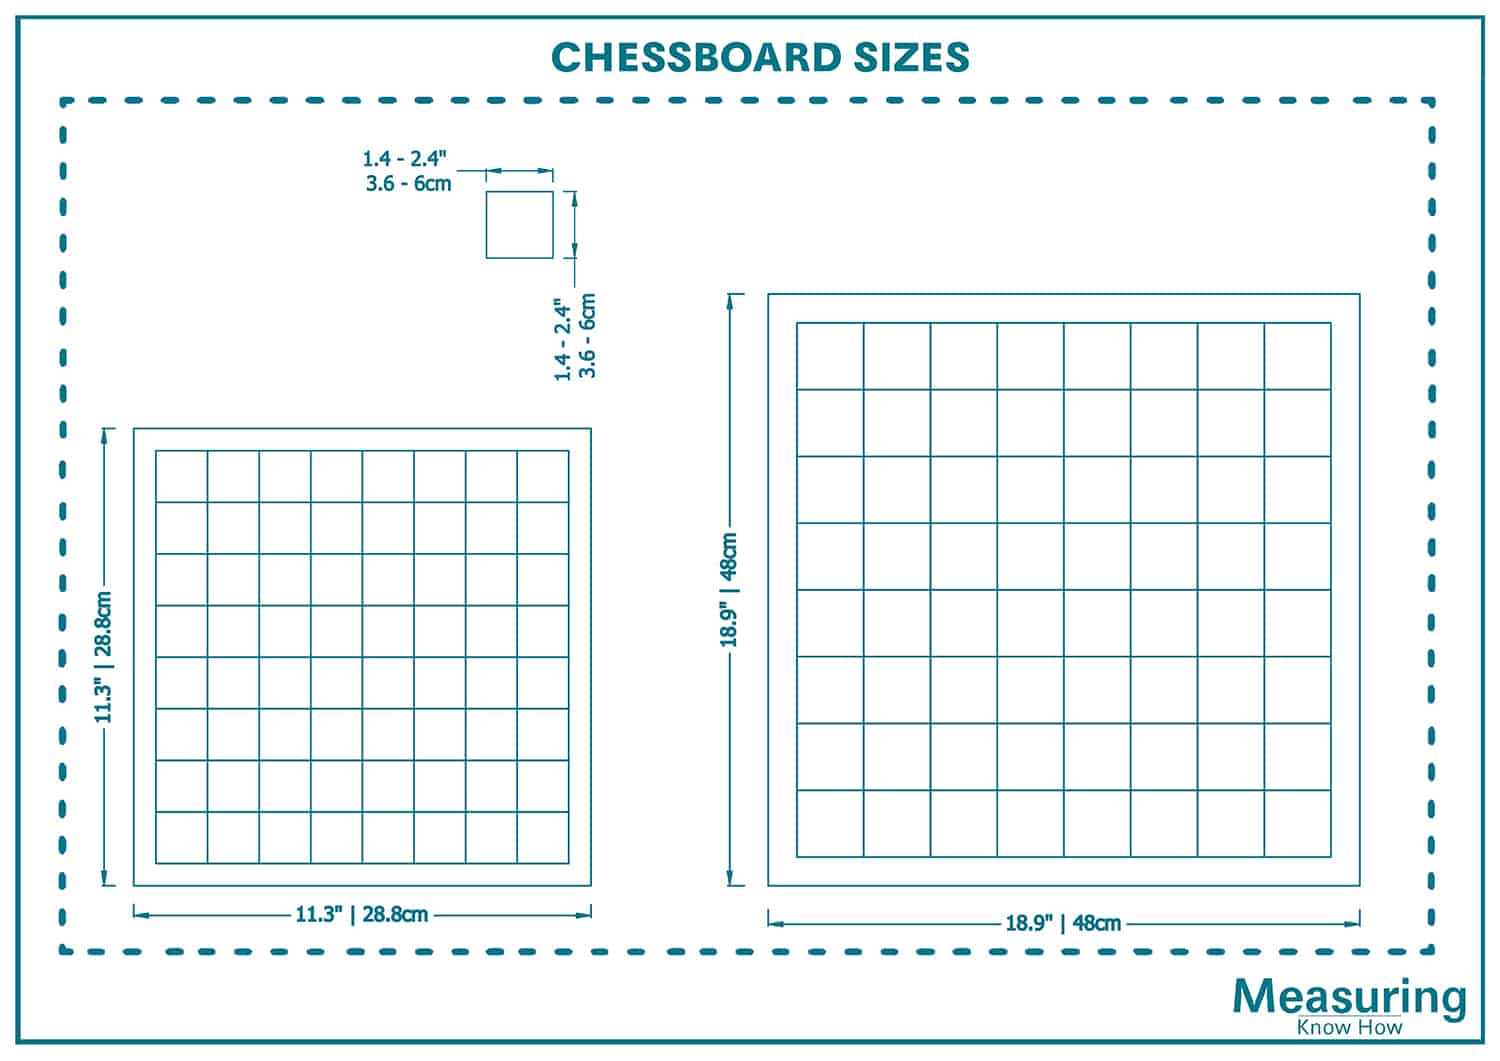 Chessboard sizes